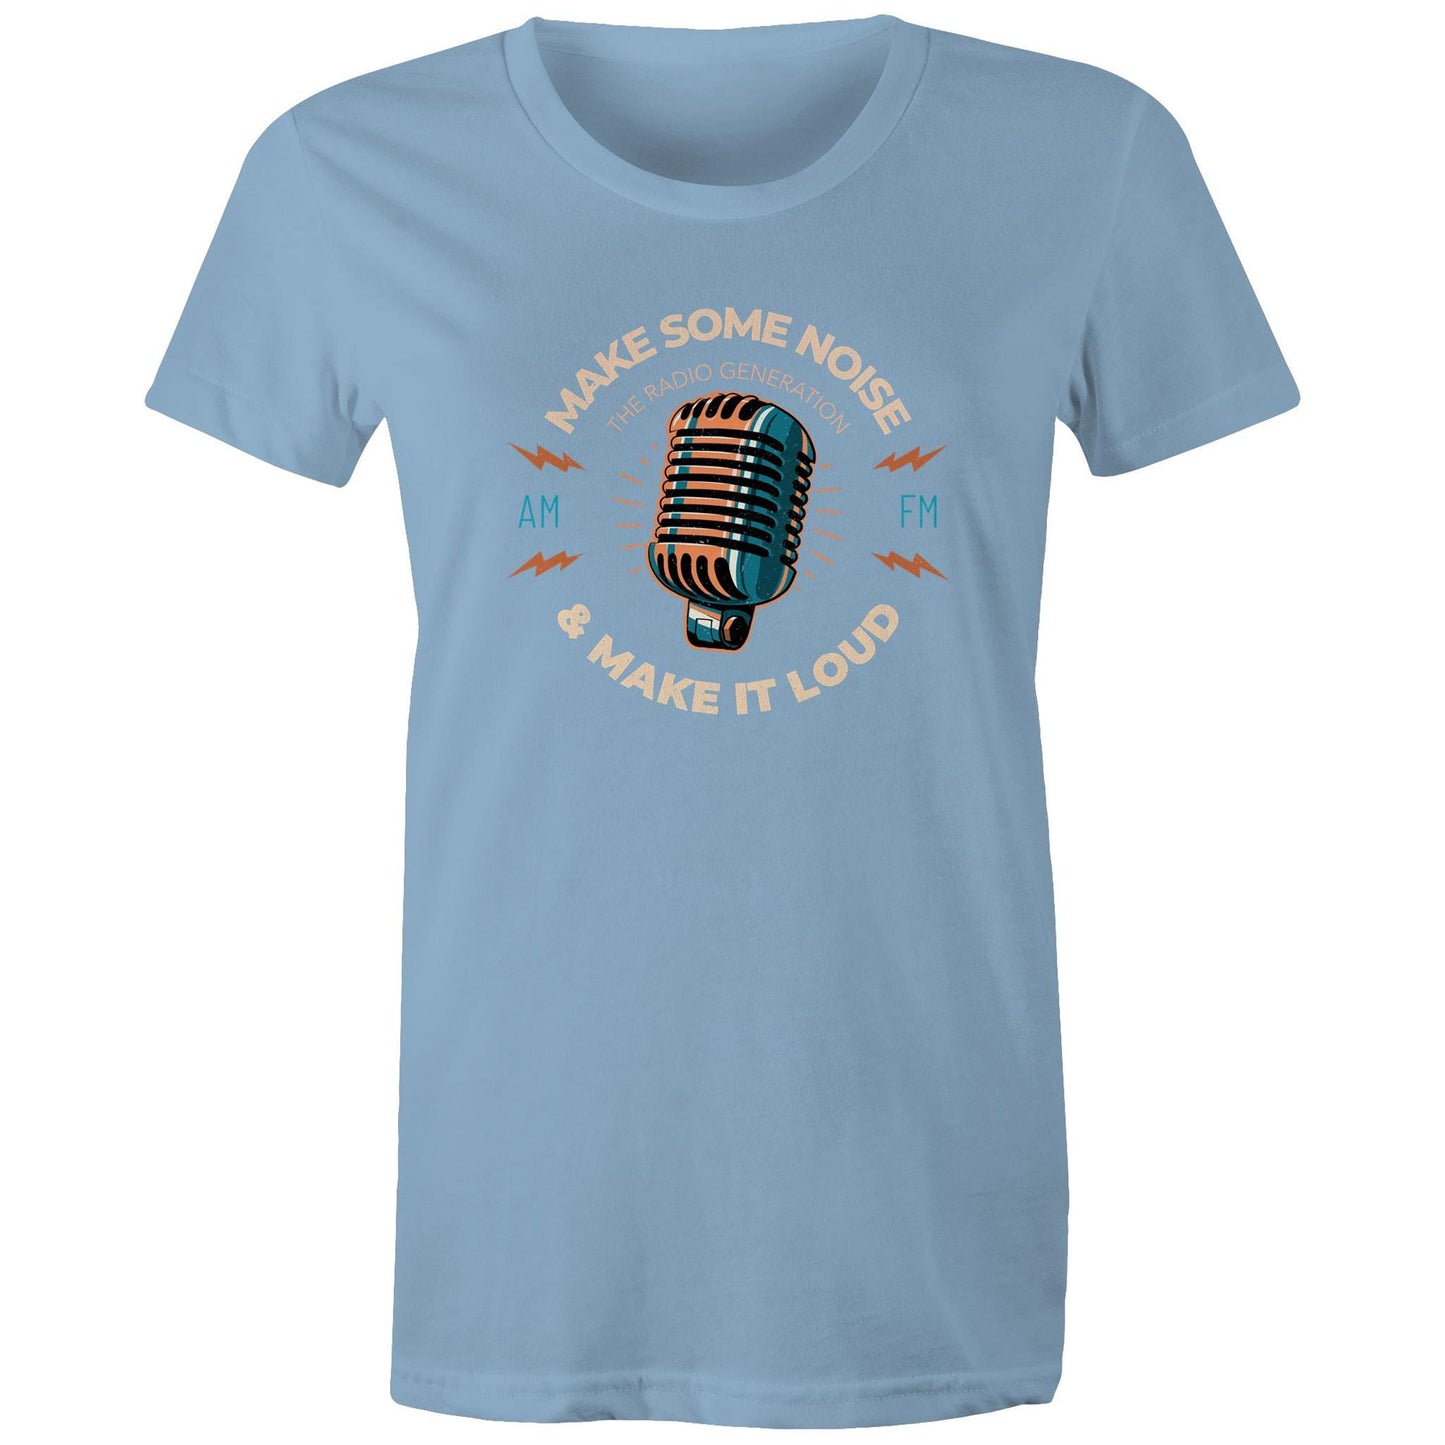 Make Some Noise And Make It Loud - Womens T-shirt Carolina Blue Womens T-shirt Music